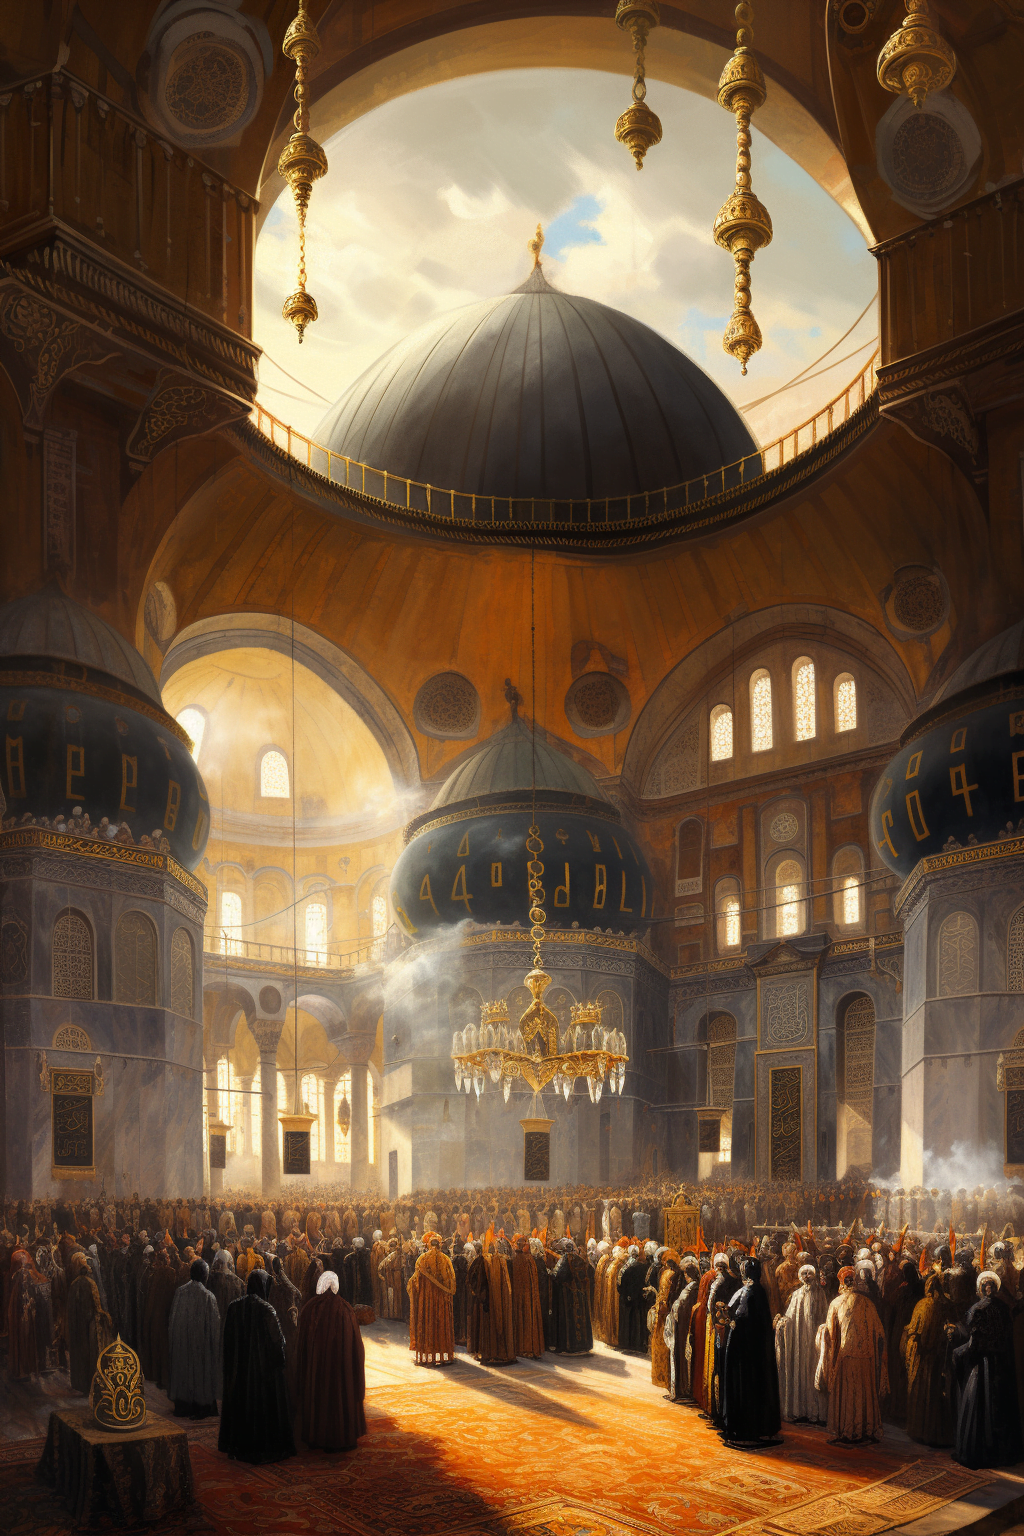 Traces of History: The Splendor of Hagia Sophia